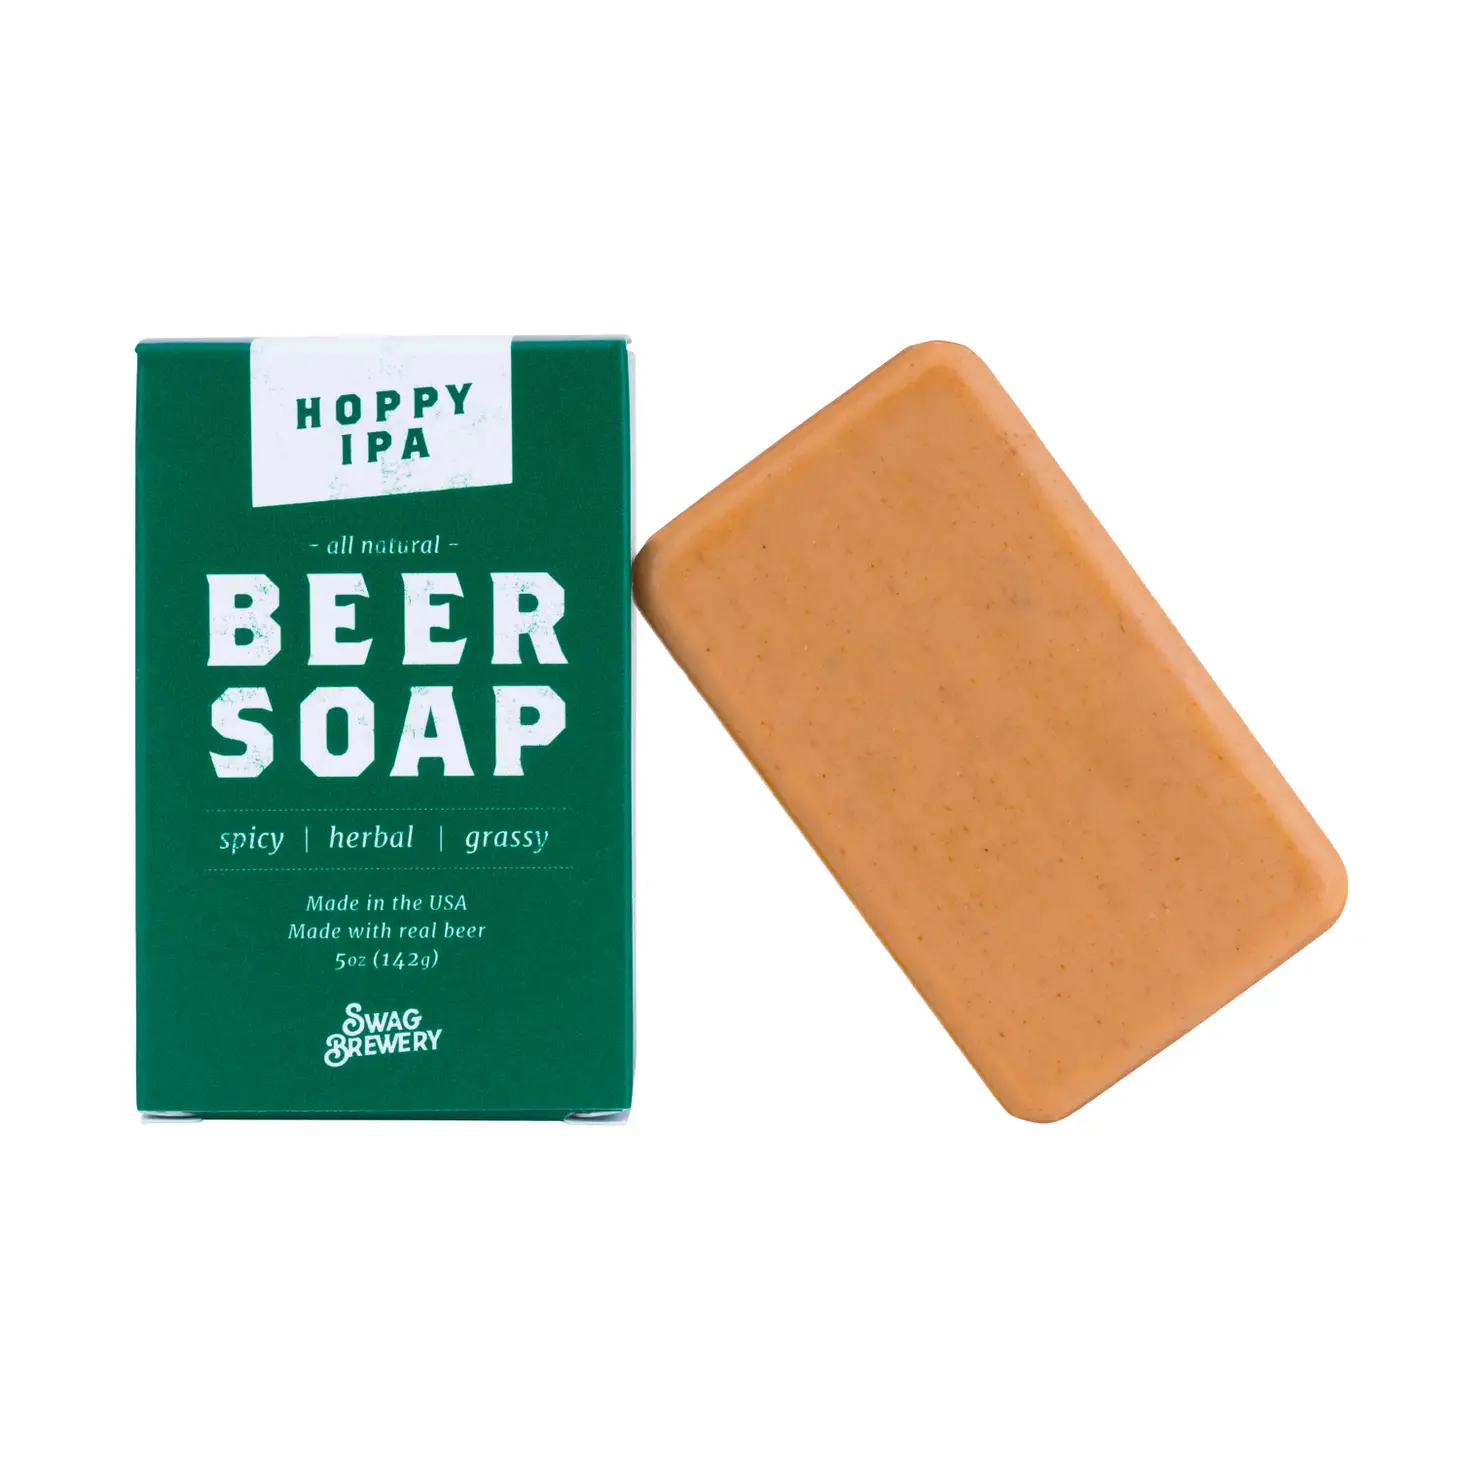 Craft Beer Hoppy IPA Bar Soap